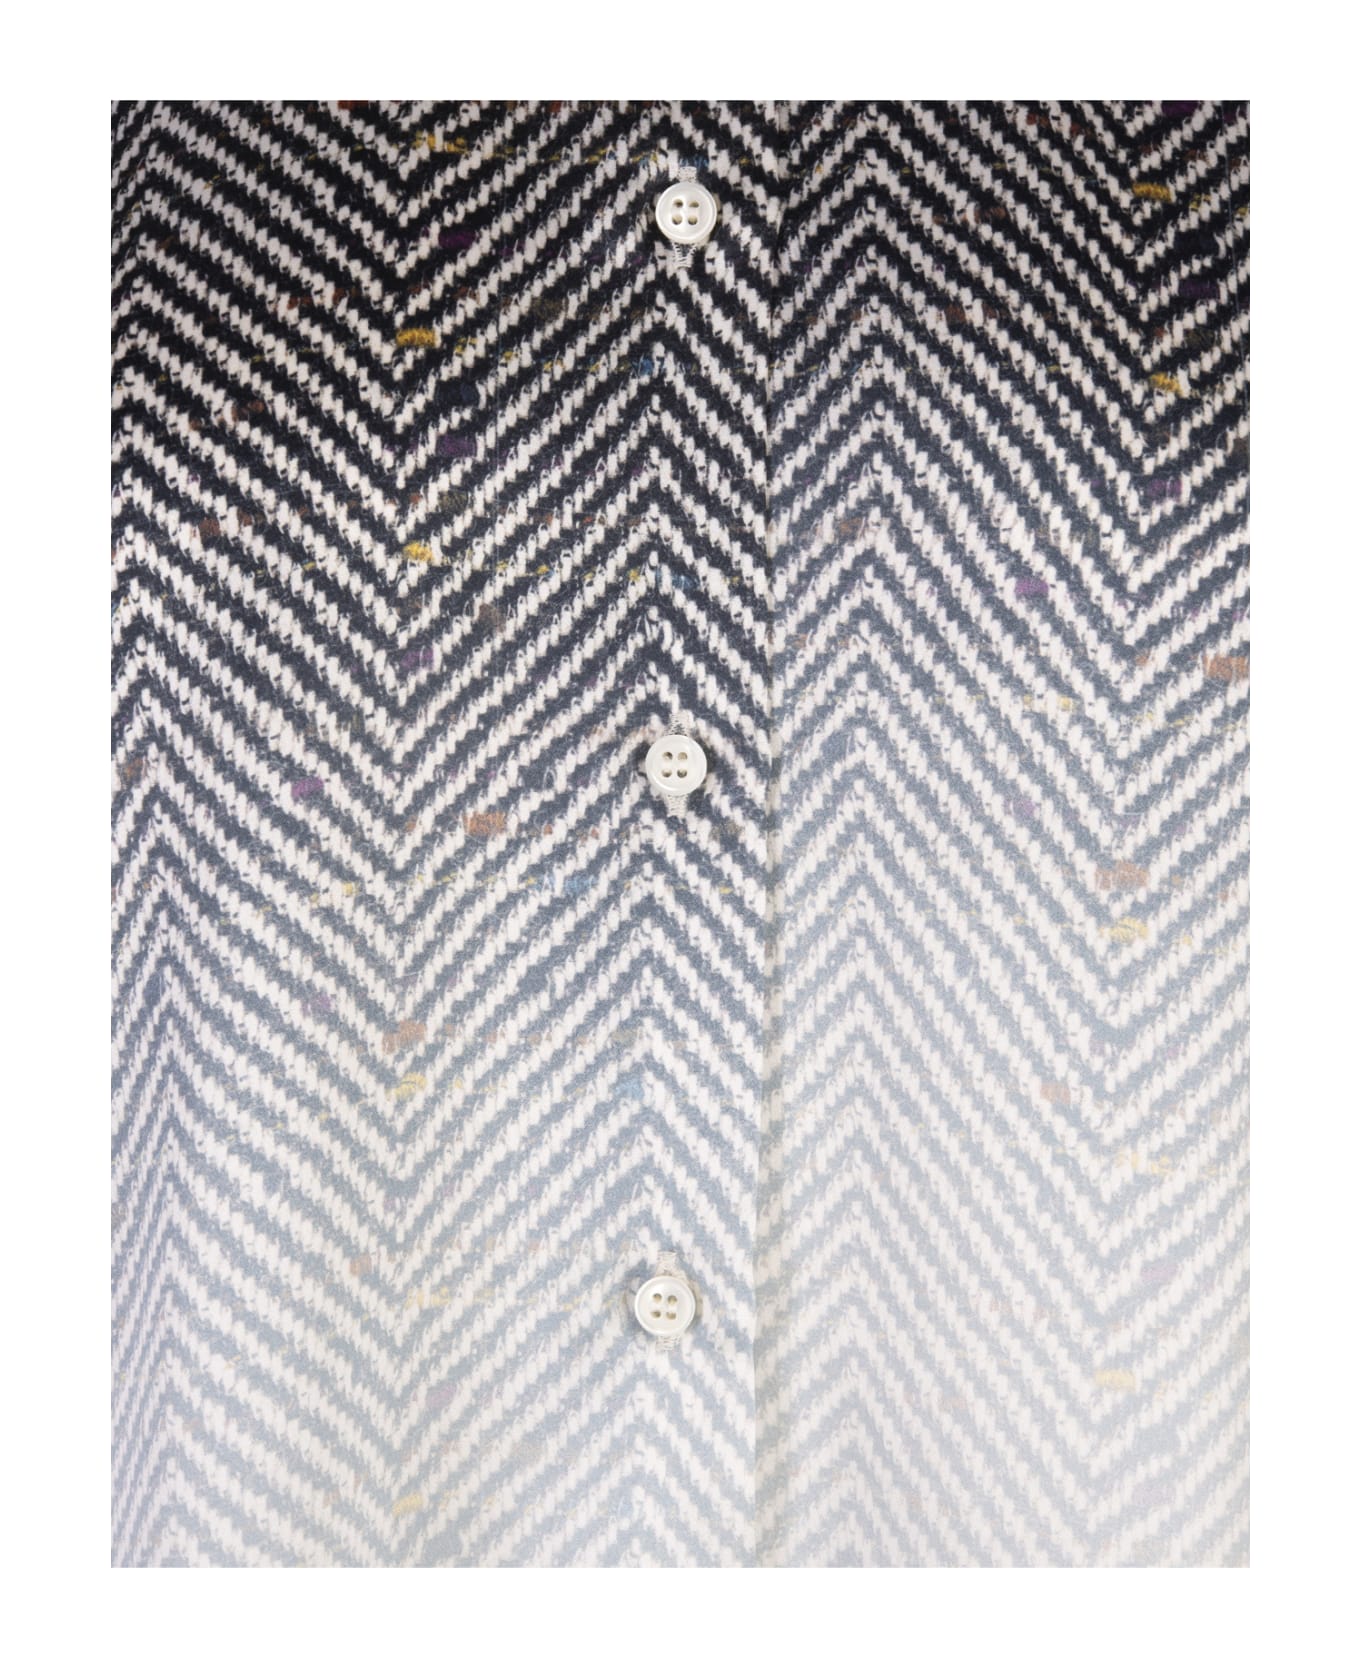 Ermanno Scervino Silk Shirt With Shaded Chevron Pattern - Grigio